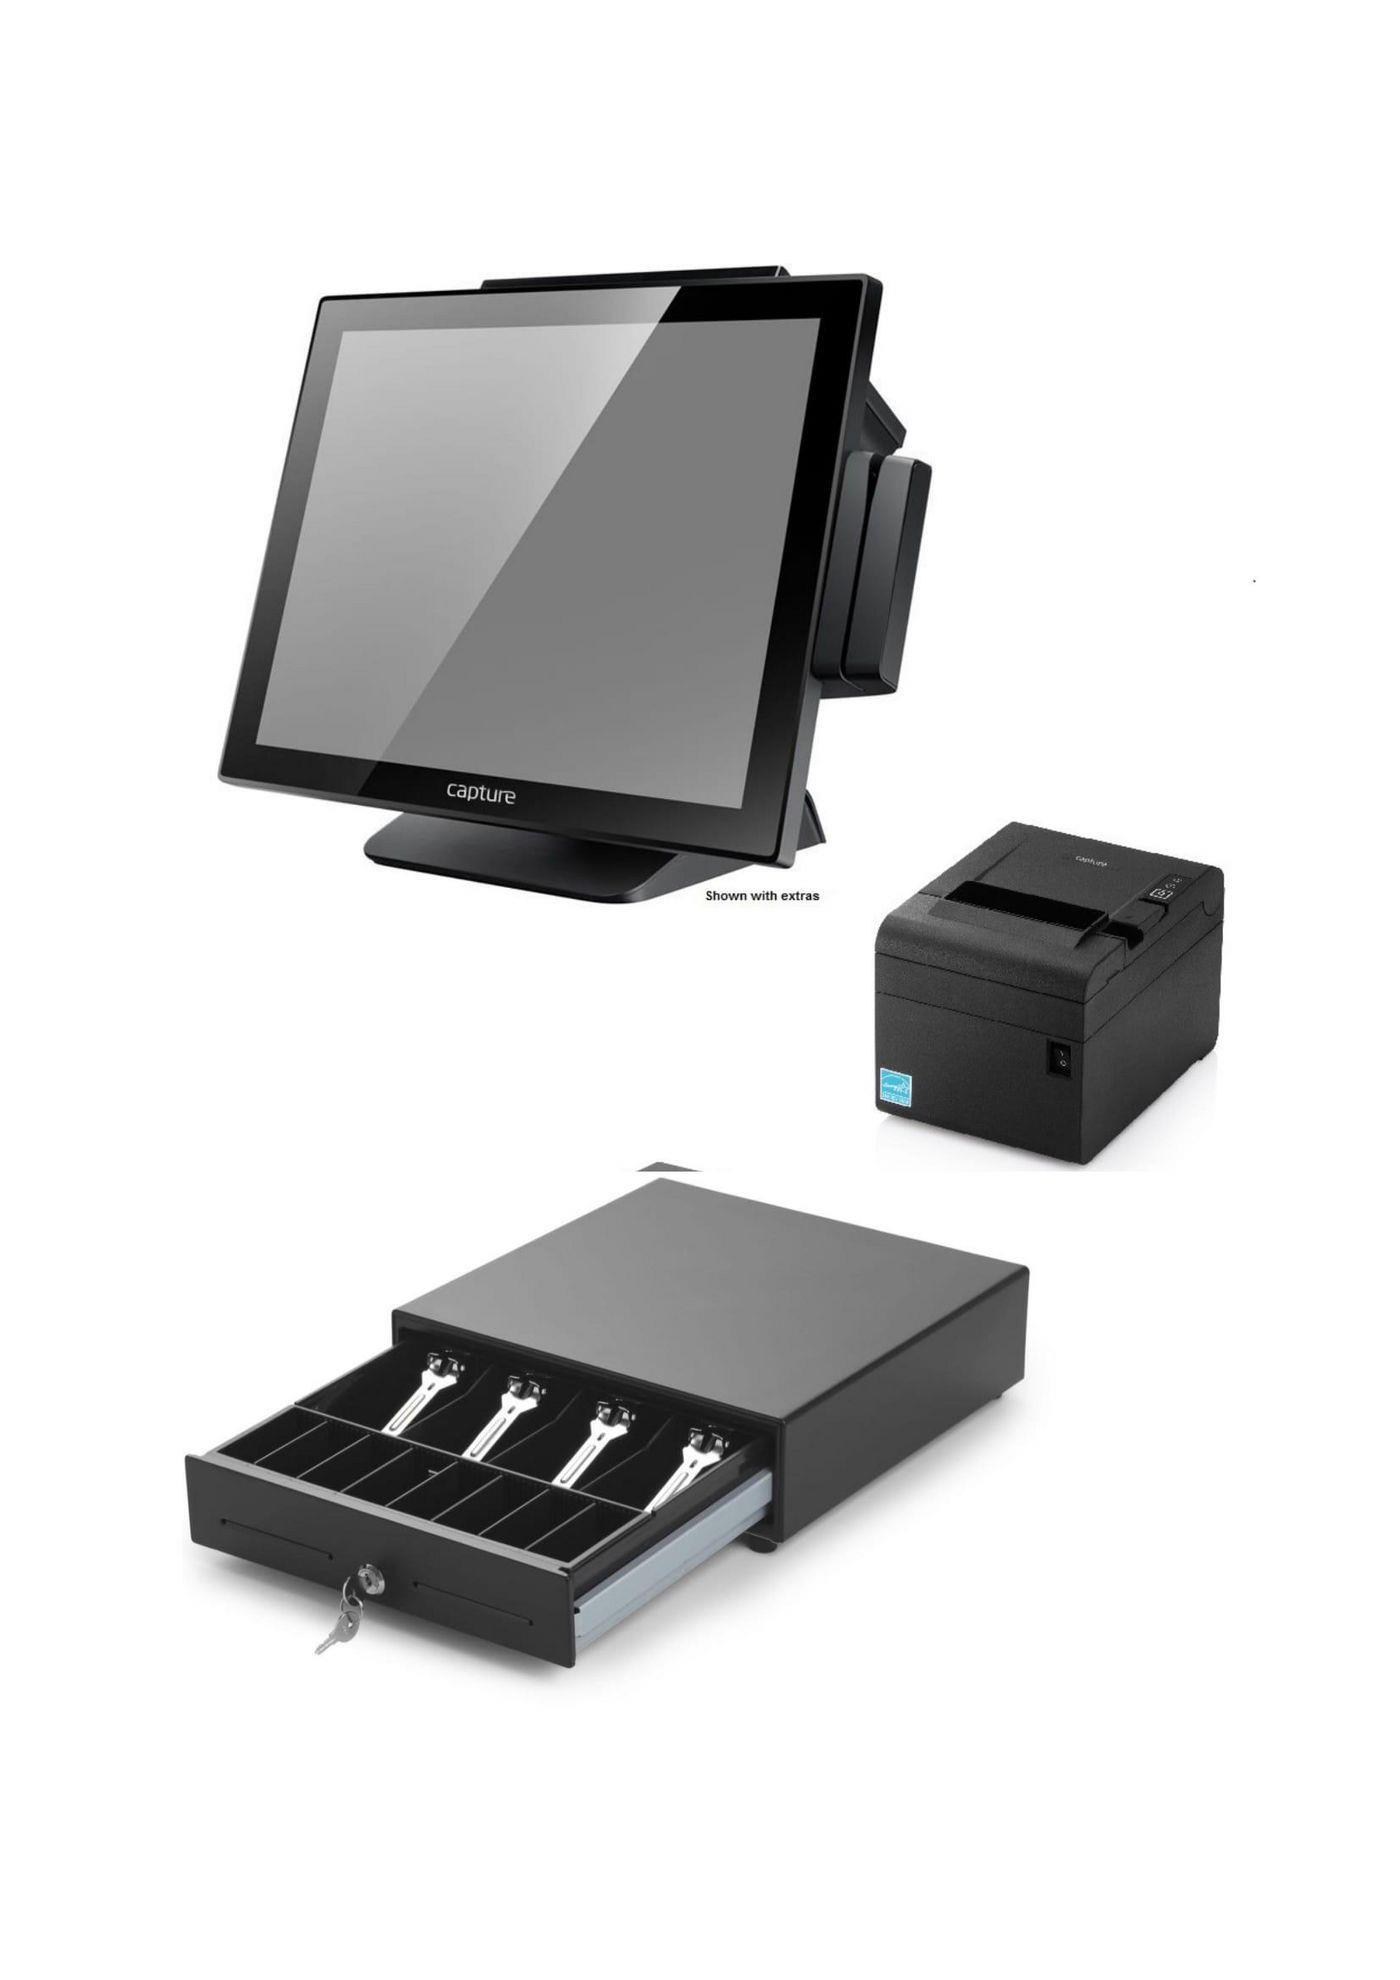 Capture POS In a Box,  Swordfish POS system + Thermal Printer + 330 mm Cash Drawer0 